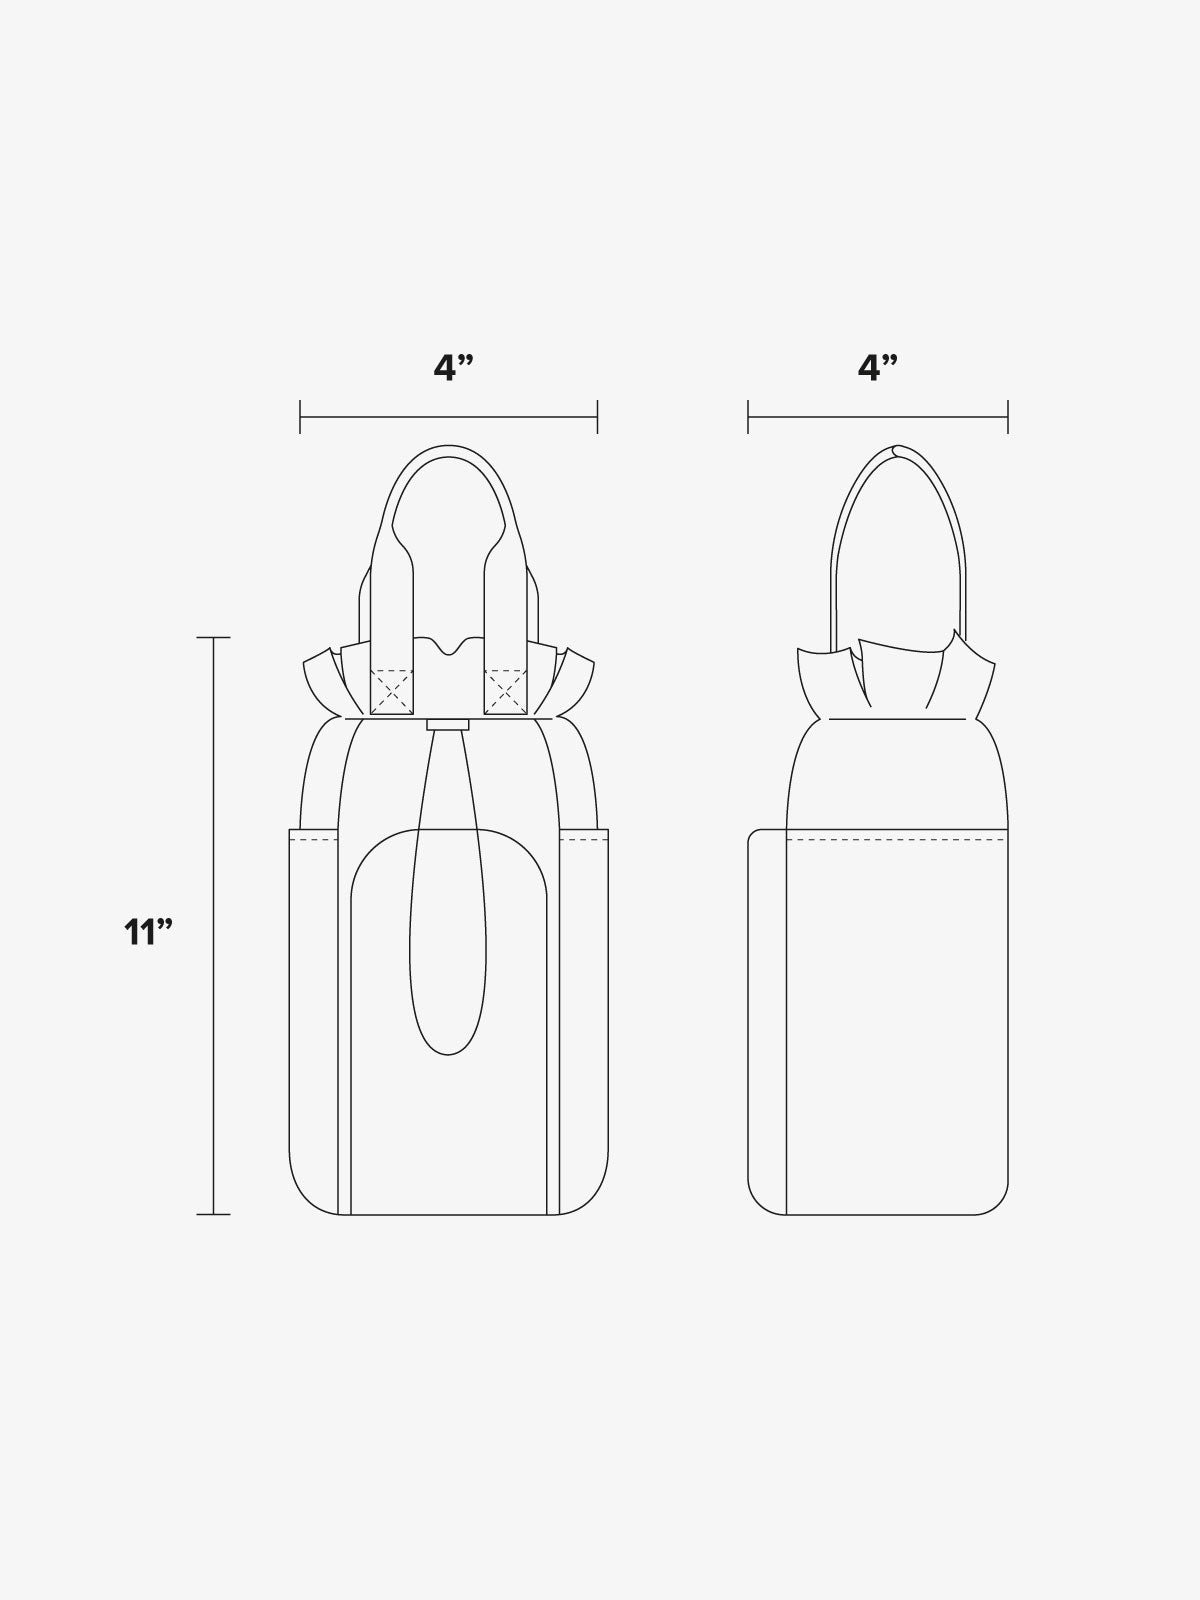 water bottle holder dimensions